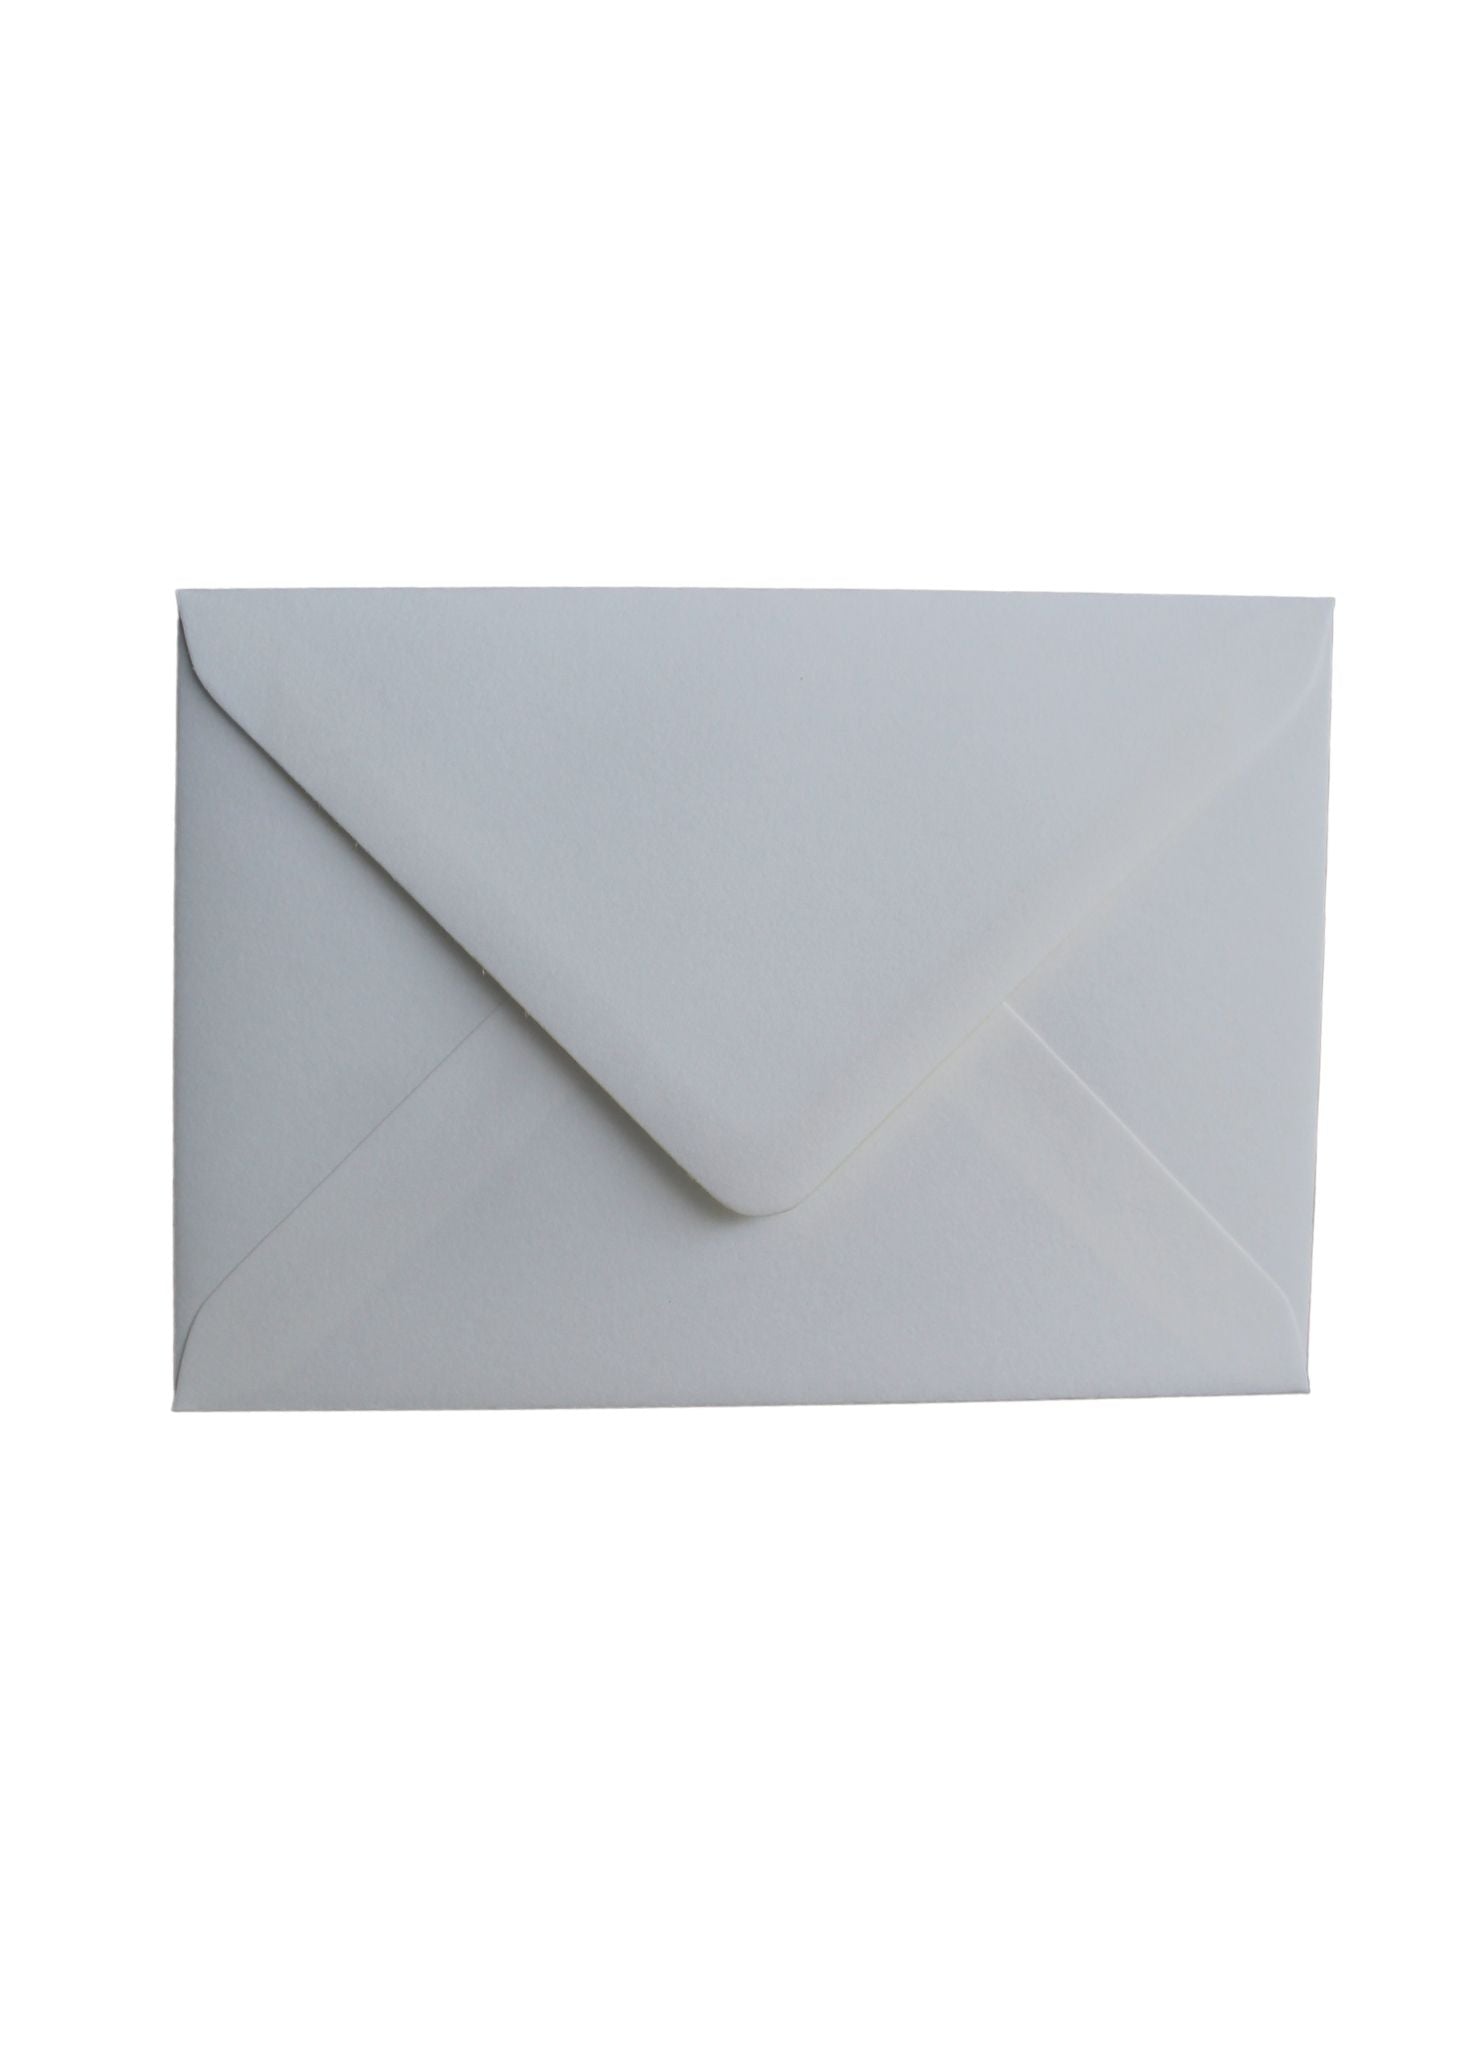 Colorplan Bright White C6 Envelope - Liberties Papers